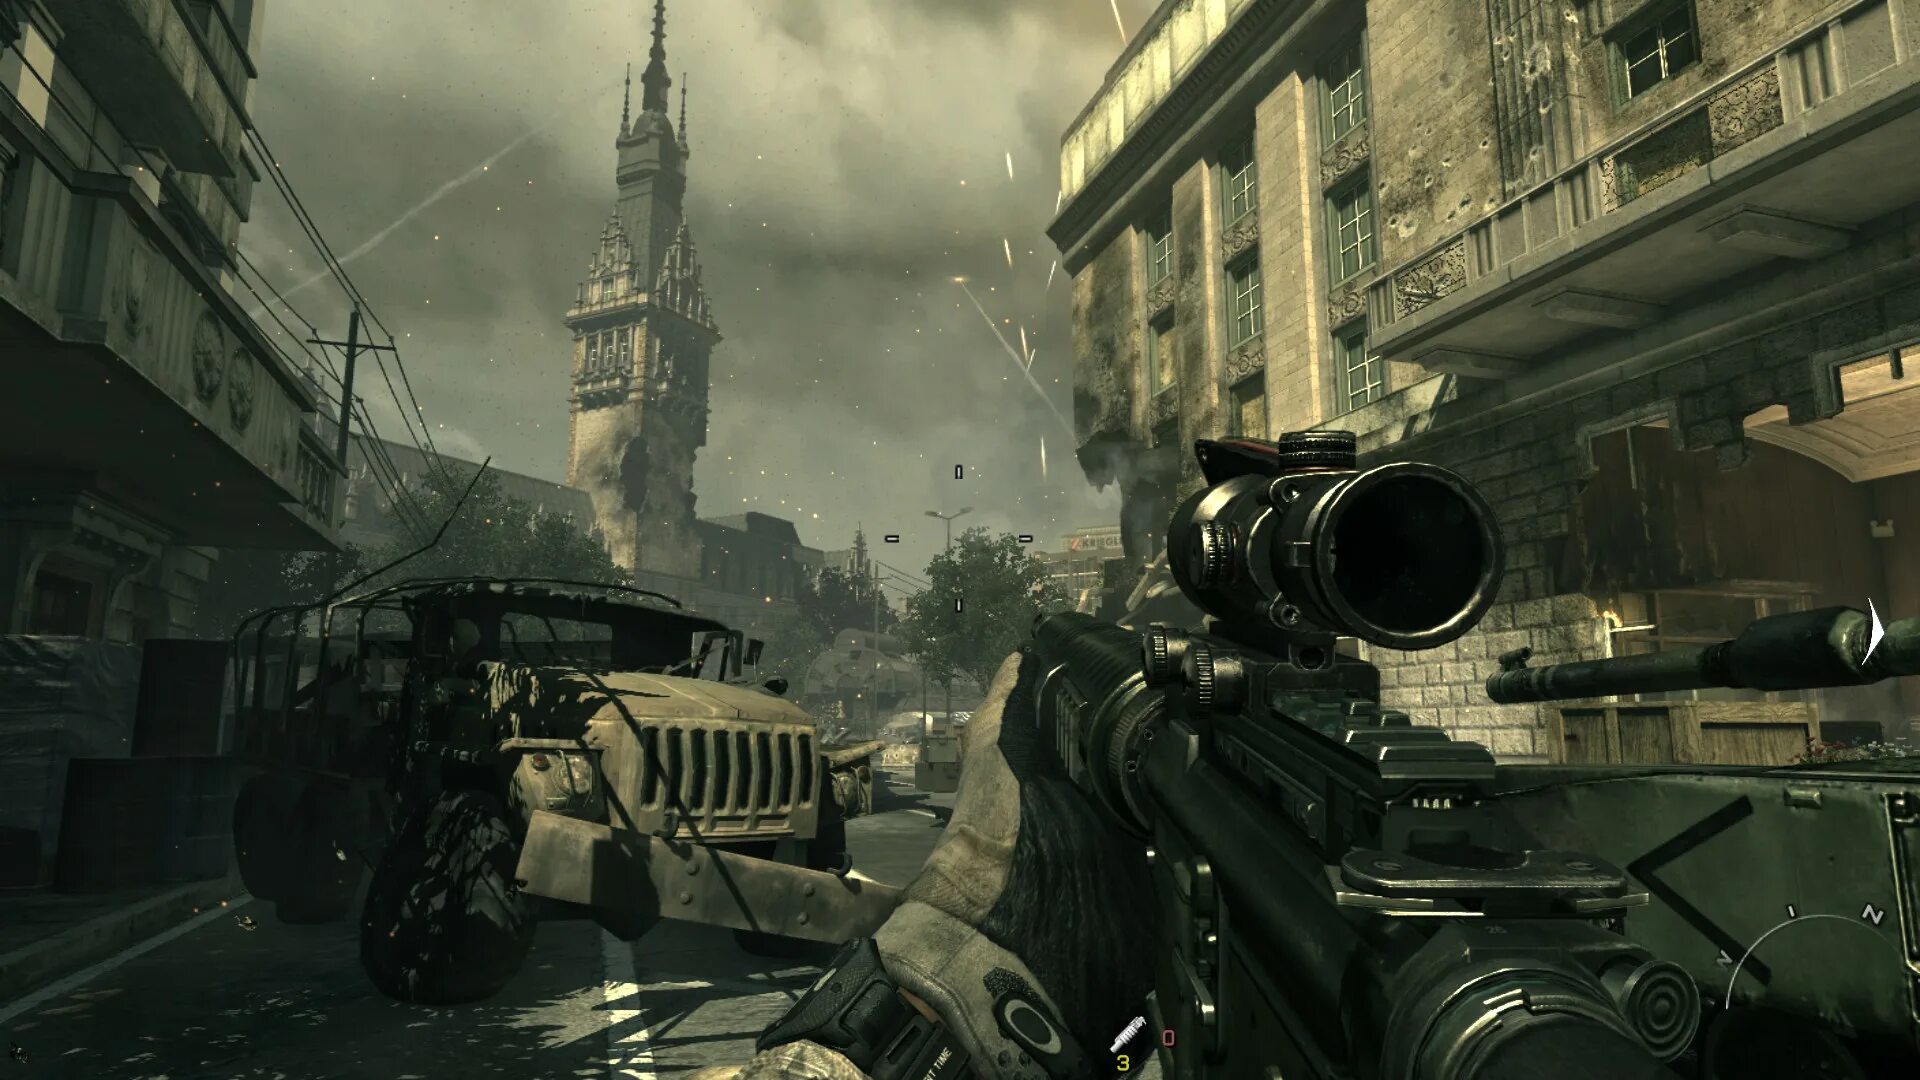 КОЛДА mw3. Modern Warfare 3. Call of Duty 4 Modern Warfare 3. Call of Duty Modern Warfare 3 2011. Купить кал оф дьюти модерн варфаер 3